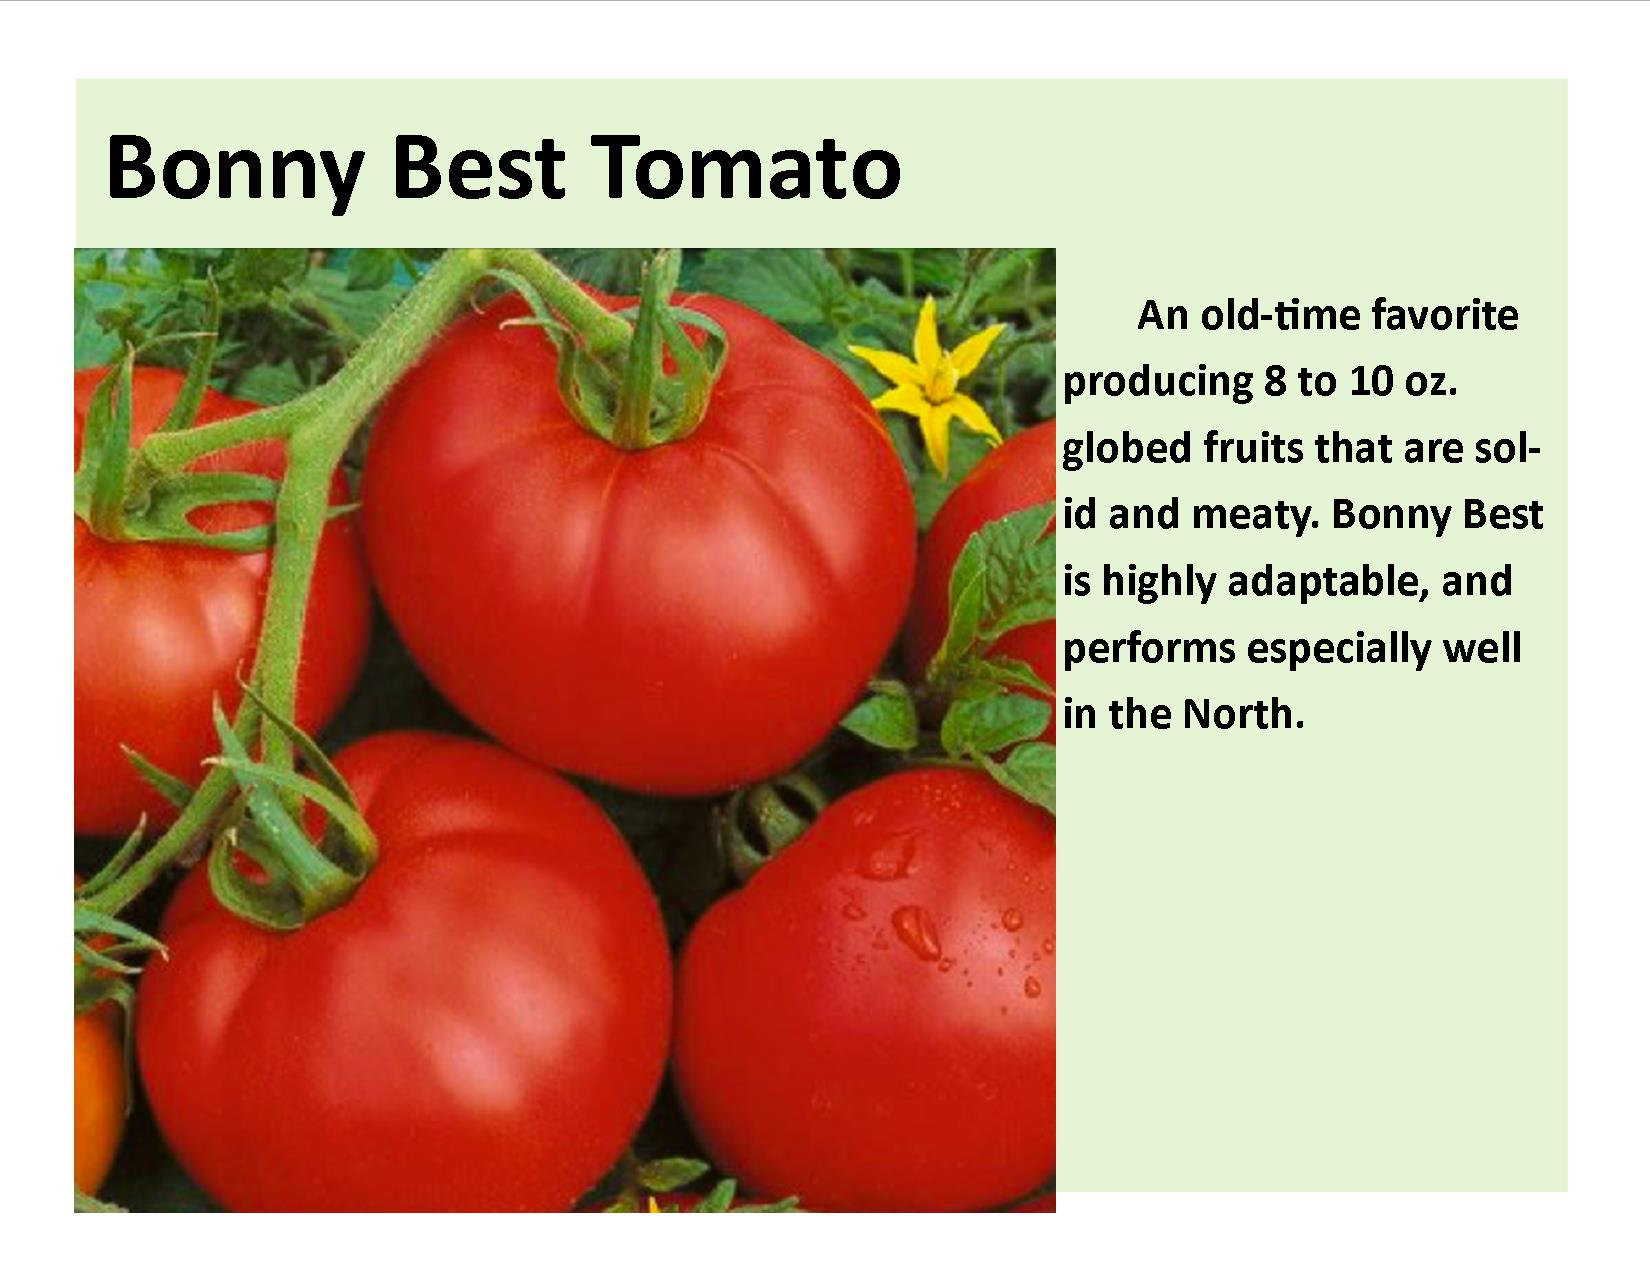 Bonny Best Tomatoes